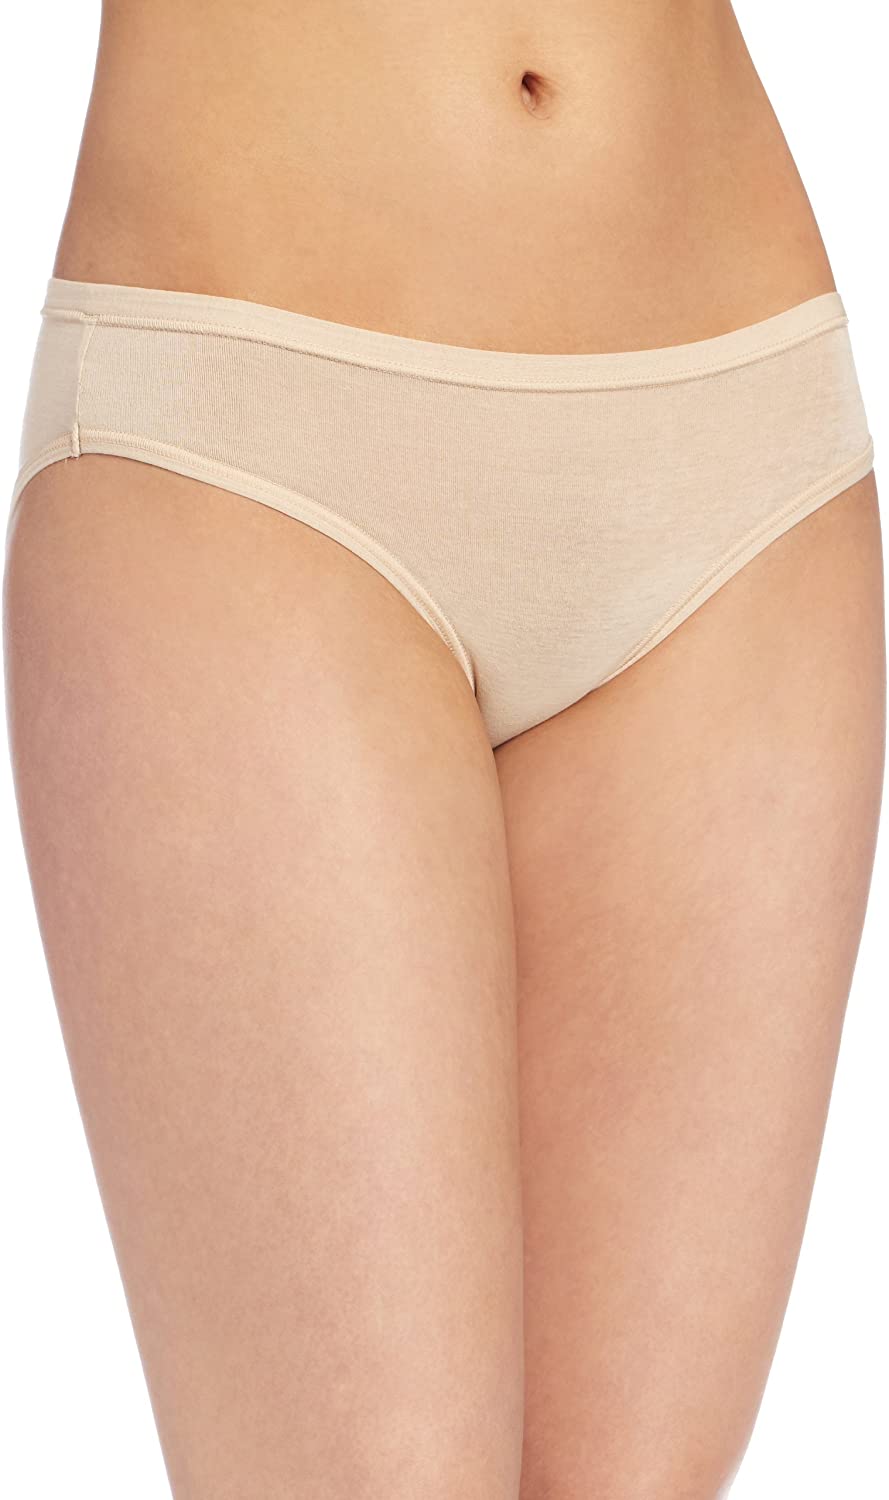 Price:$15.00 Wacoal Women's B-fitting Bikini Panty, Naturally Nude, One Size at Amazon Women’s Clothing store  Bikini Underwear